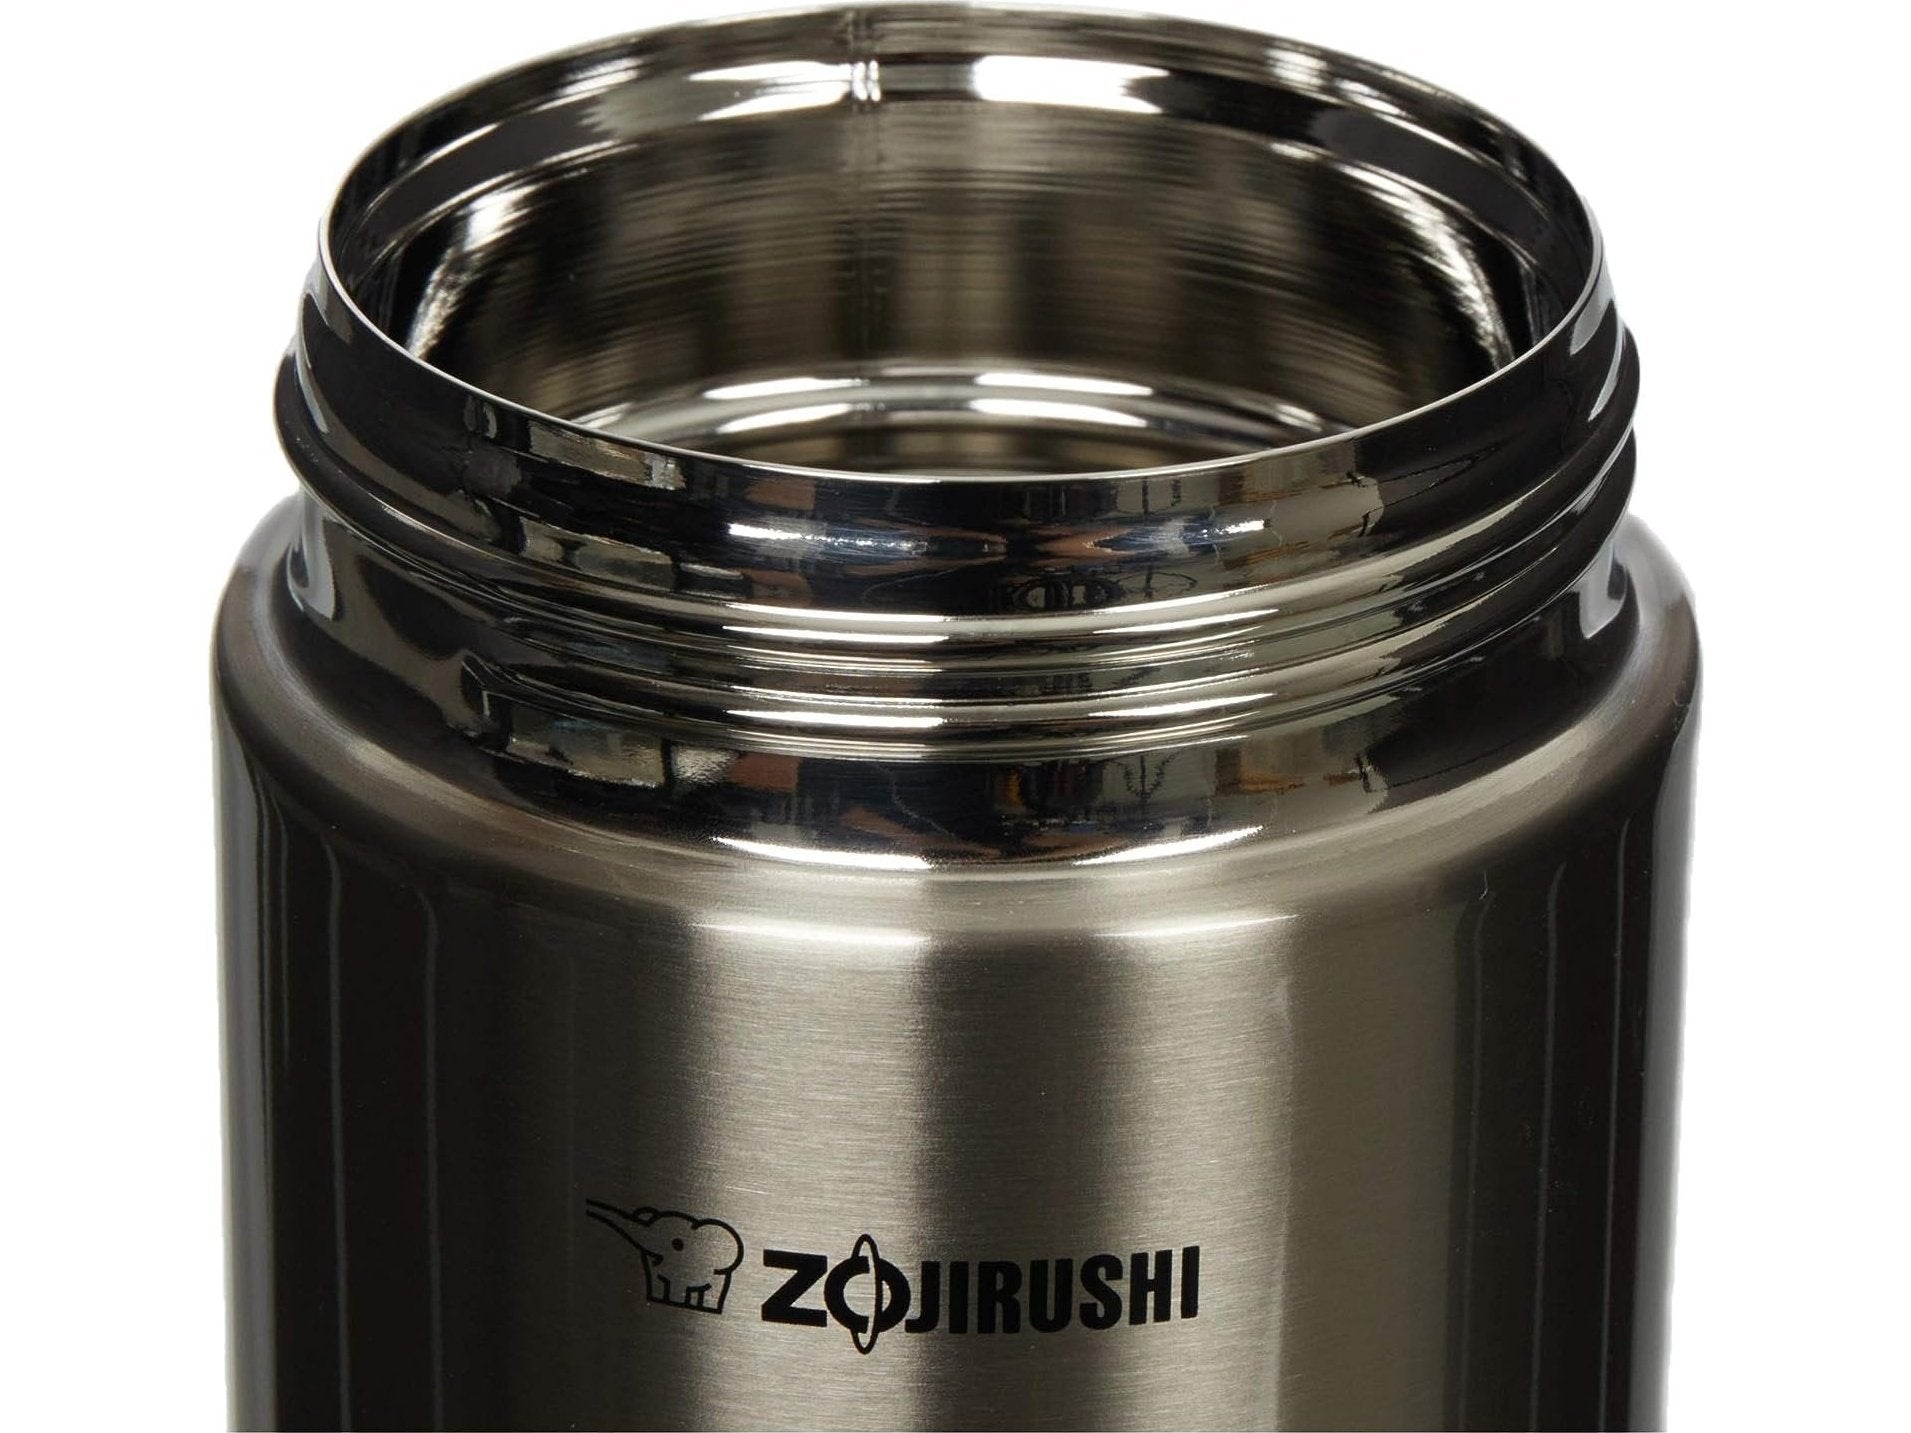 Zojirushi Stainless Steel Food Jar 16.9-Ounce / 500 ml Black/Stainless